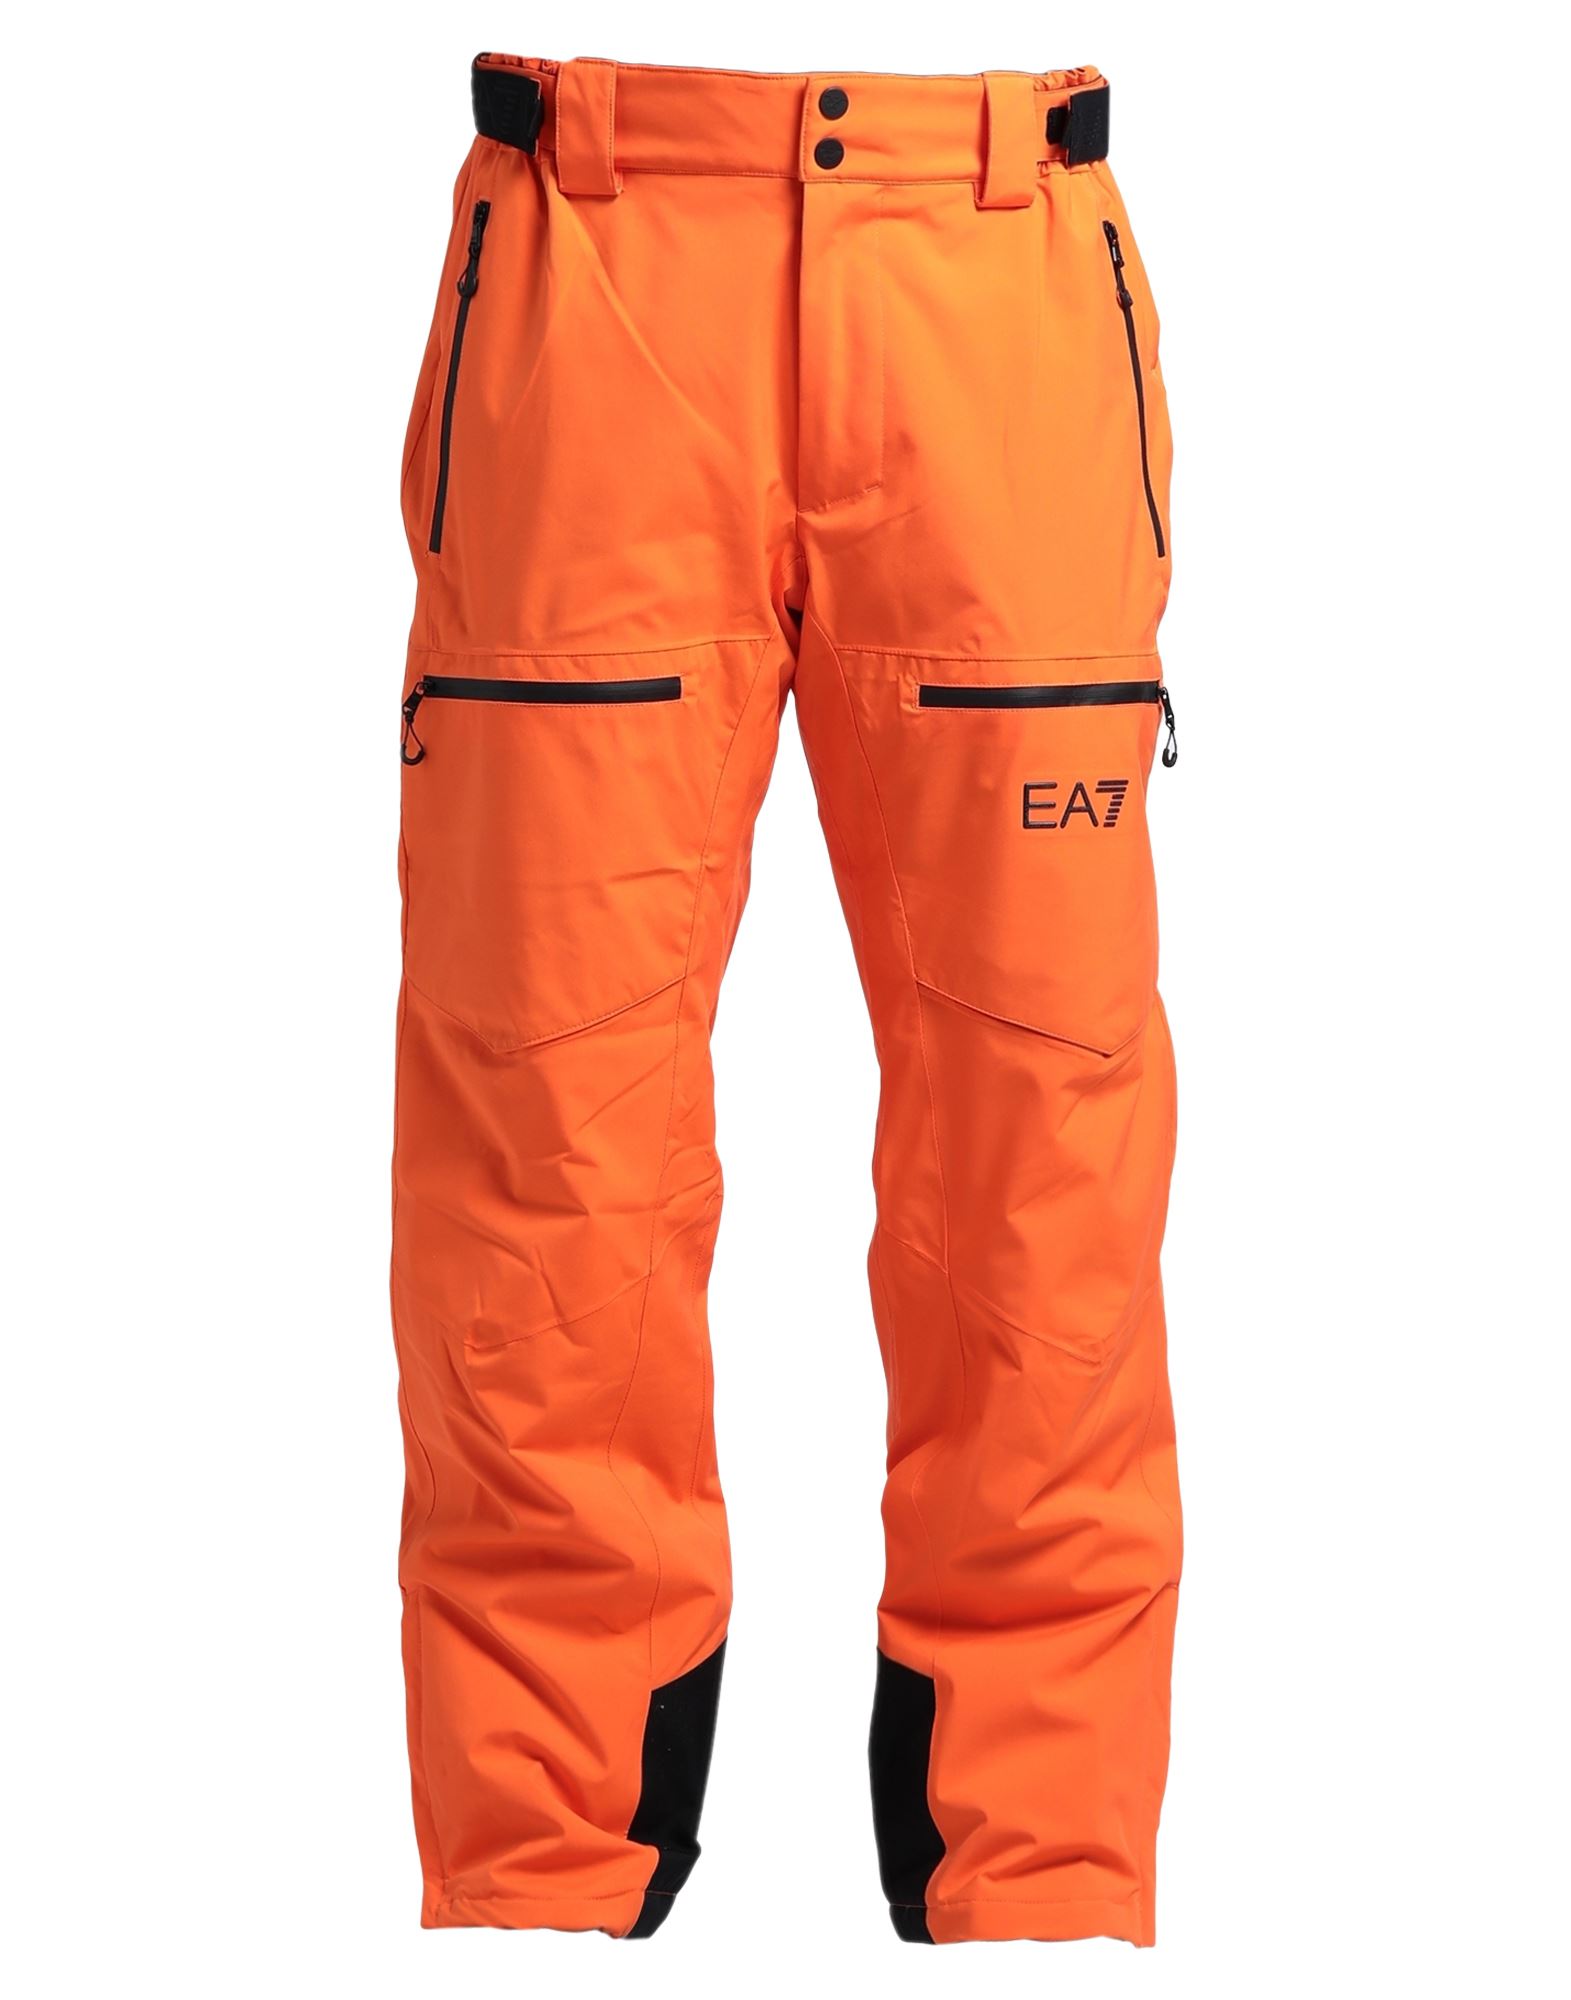 EA7 メンズ スキーウェア オレンジ